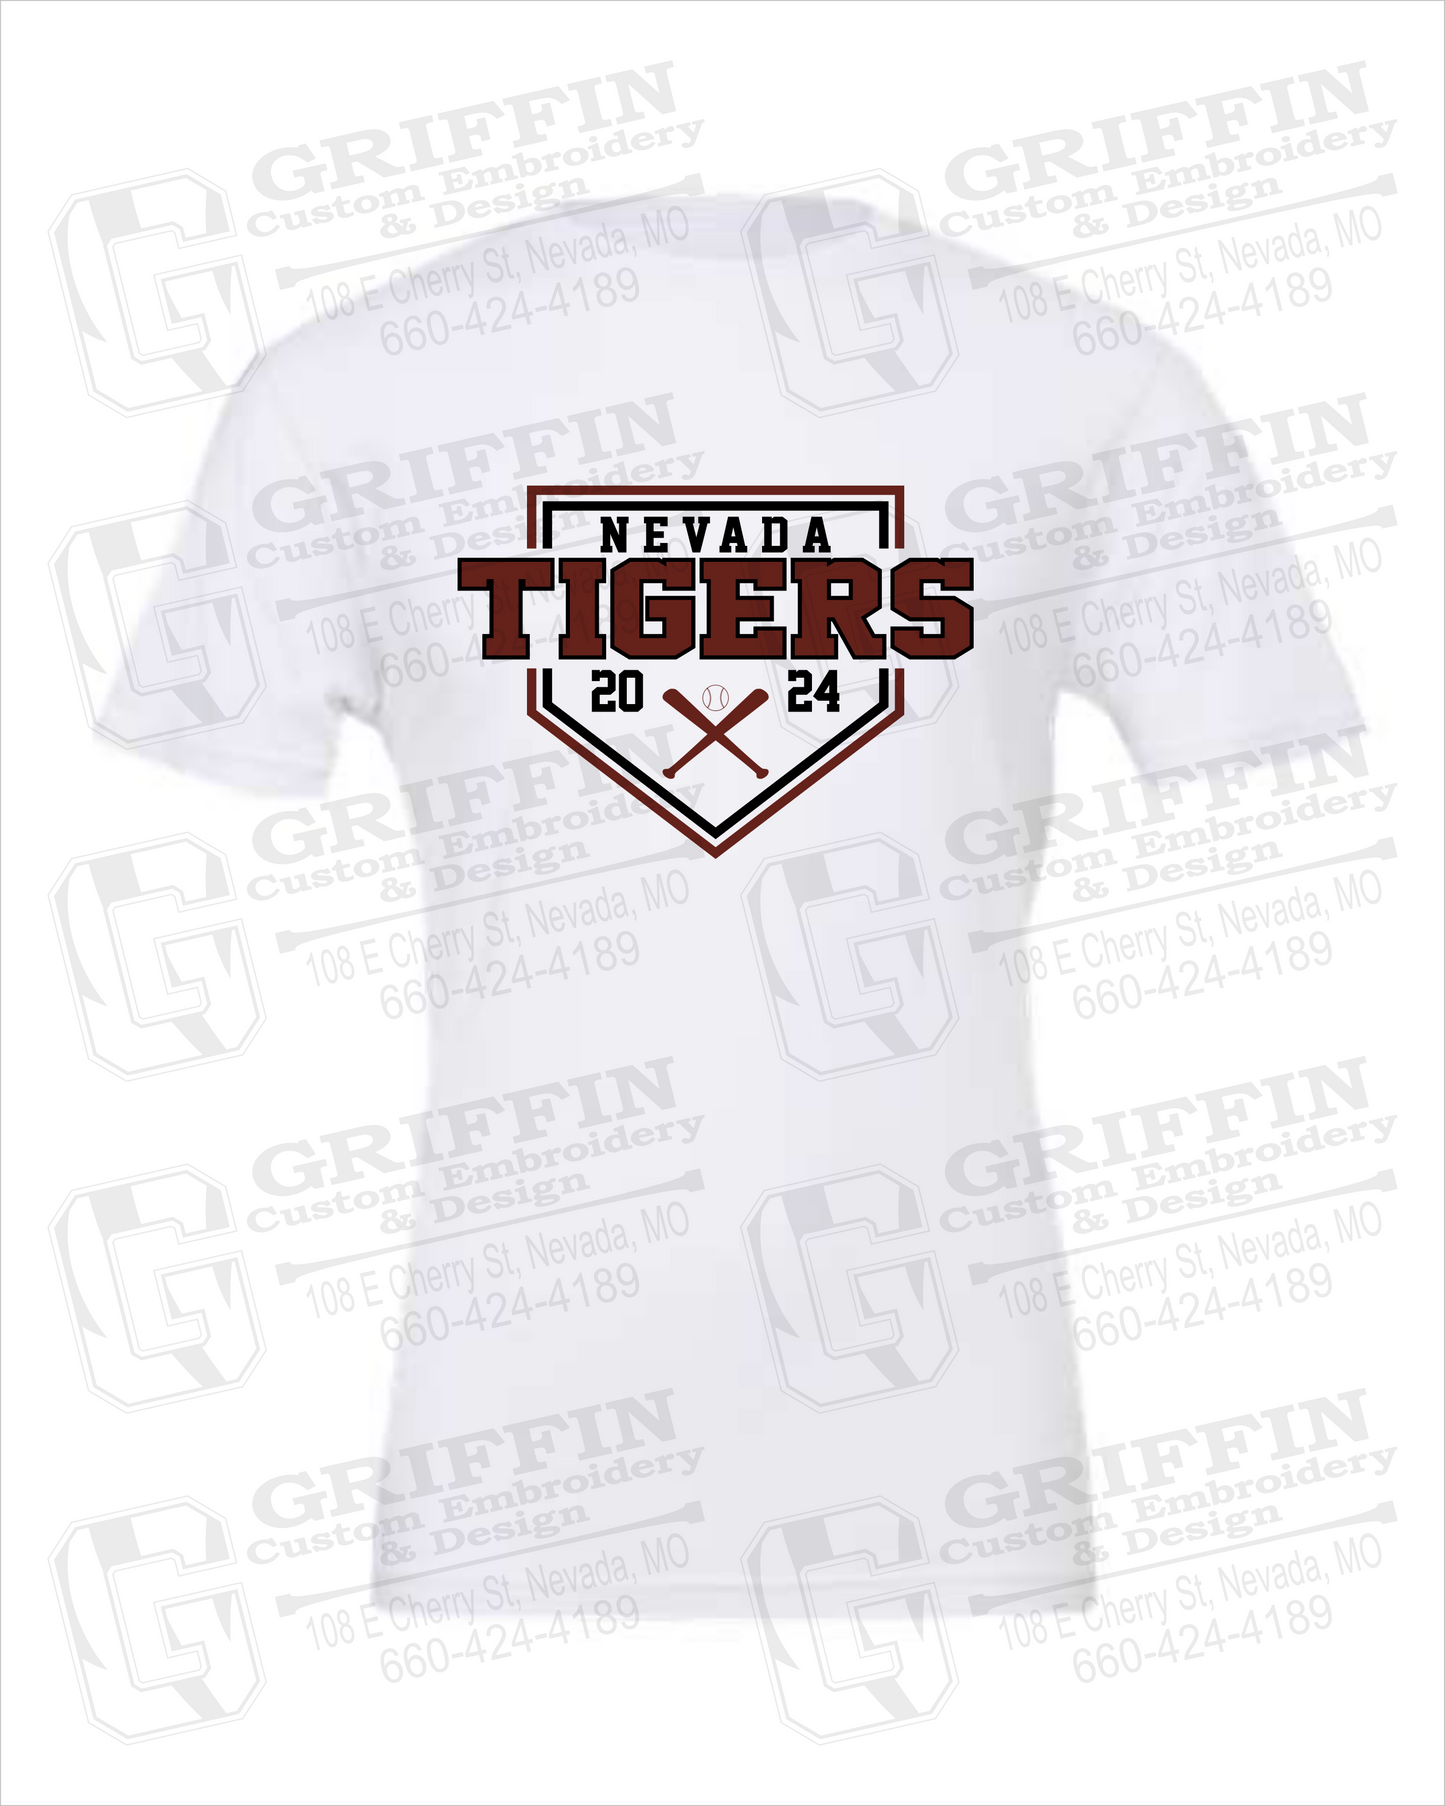 Nevada Tigers 25-A 100% Cotton Short Sleeve T-Shirt - Baseball